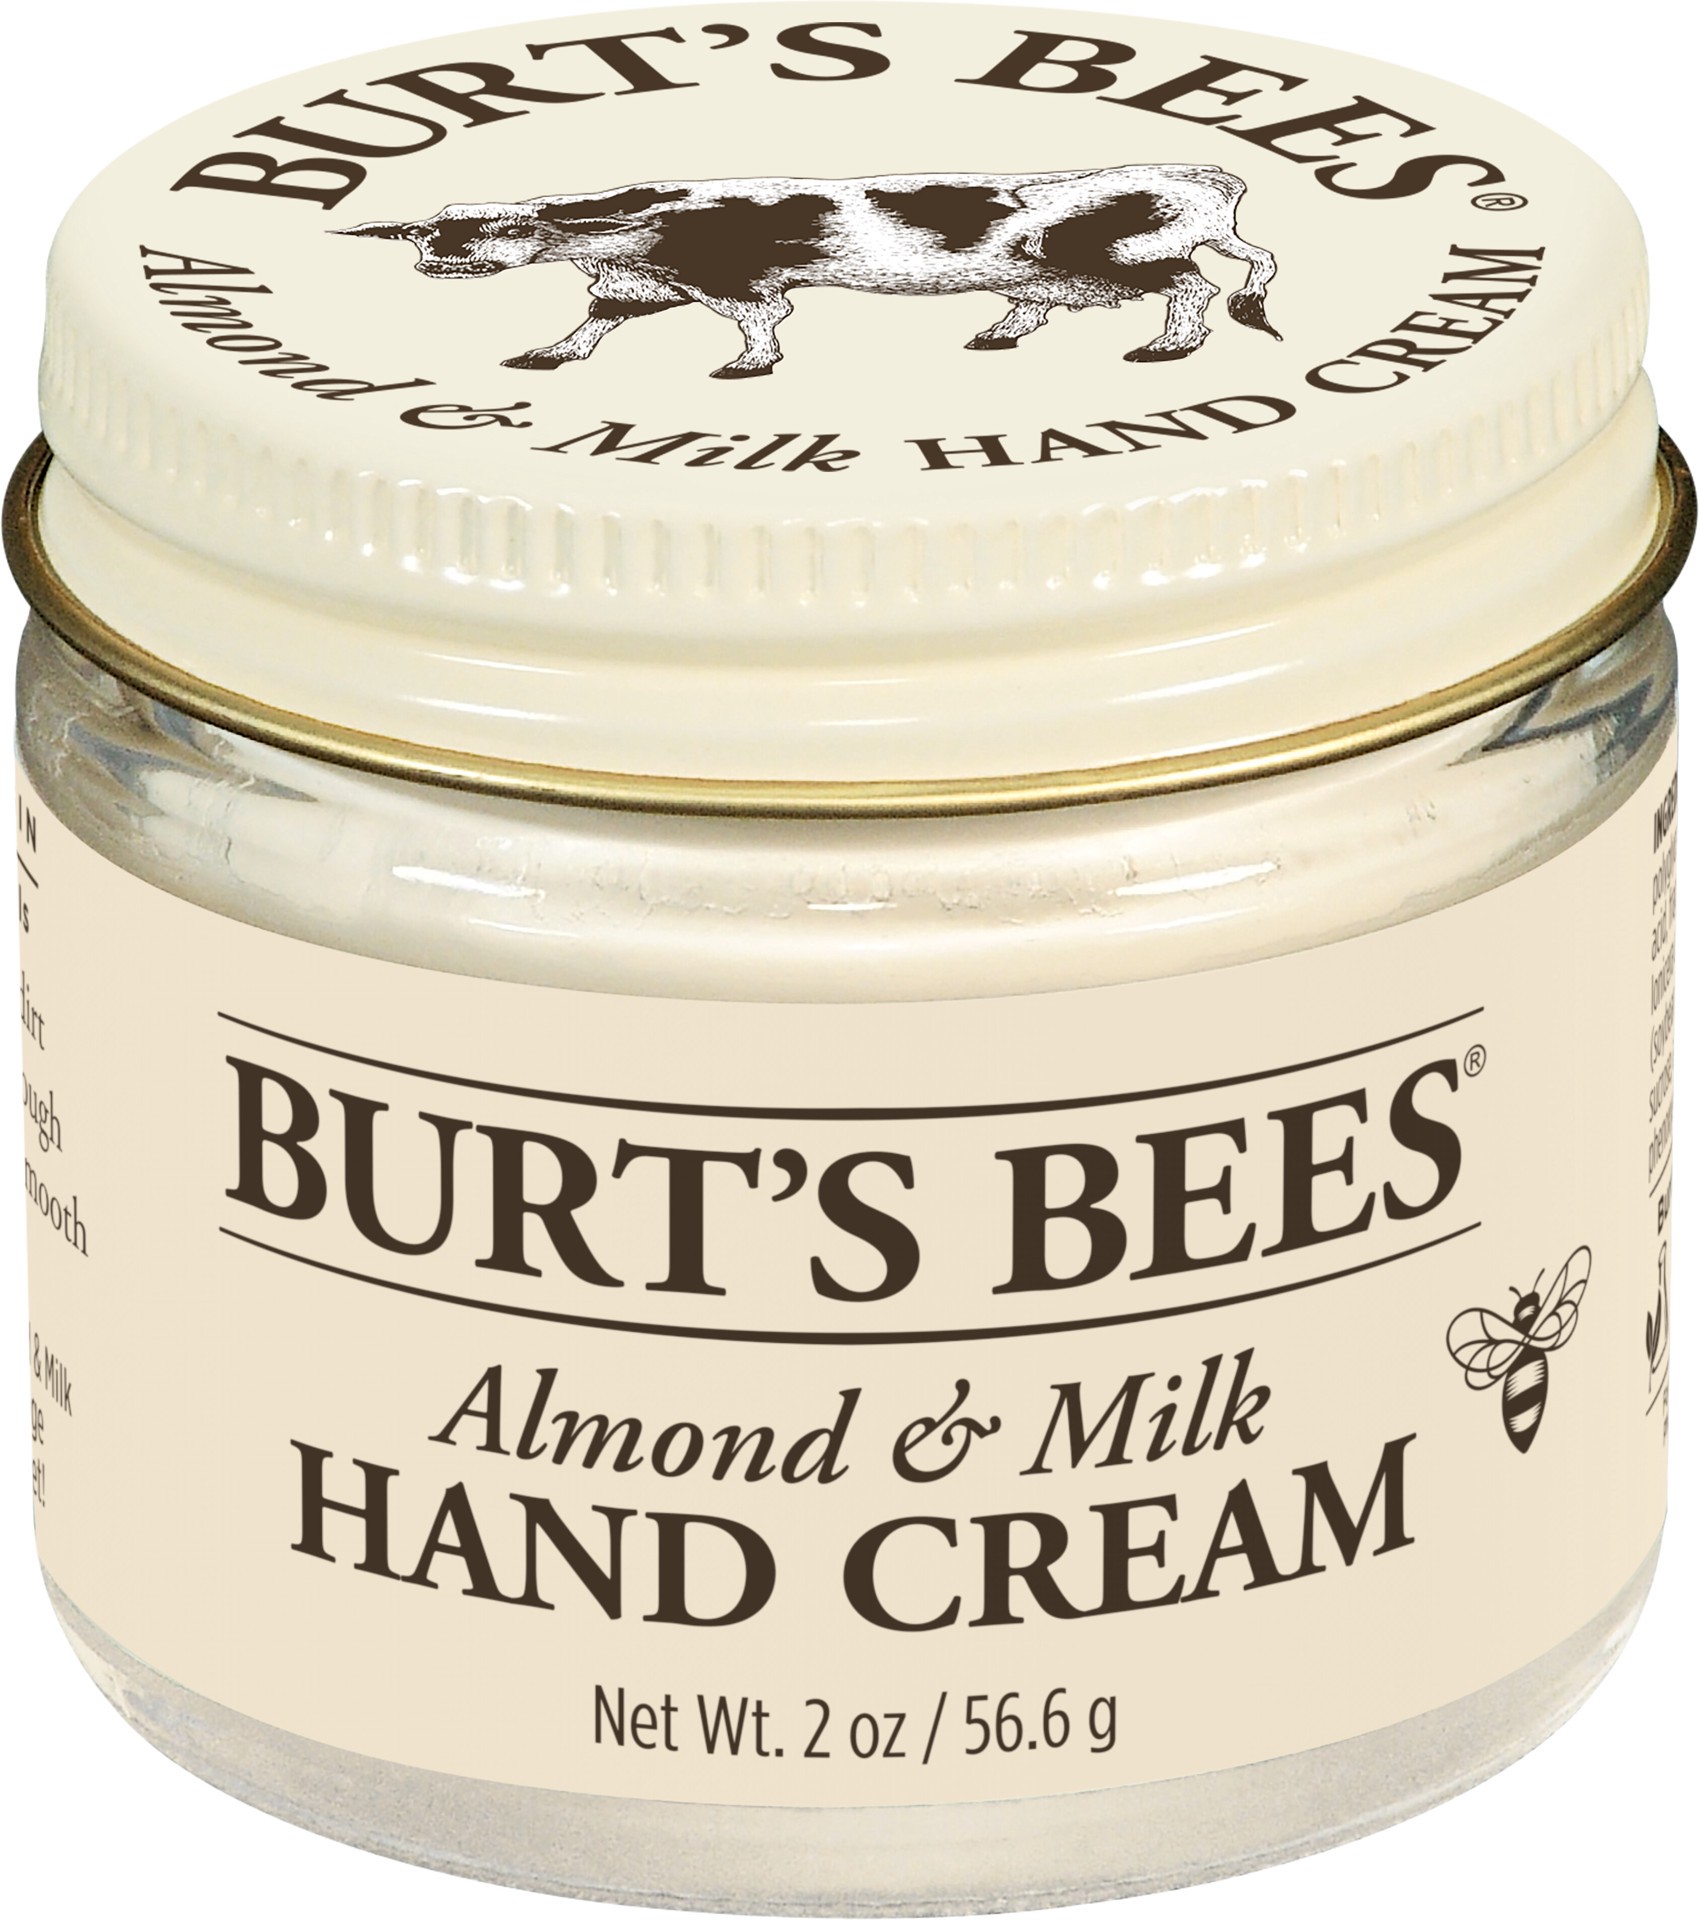 slide 1 of 87, Burt's Bees Hand Cream, Almond & Milk, 2 oz